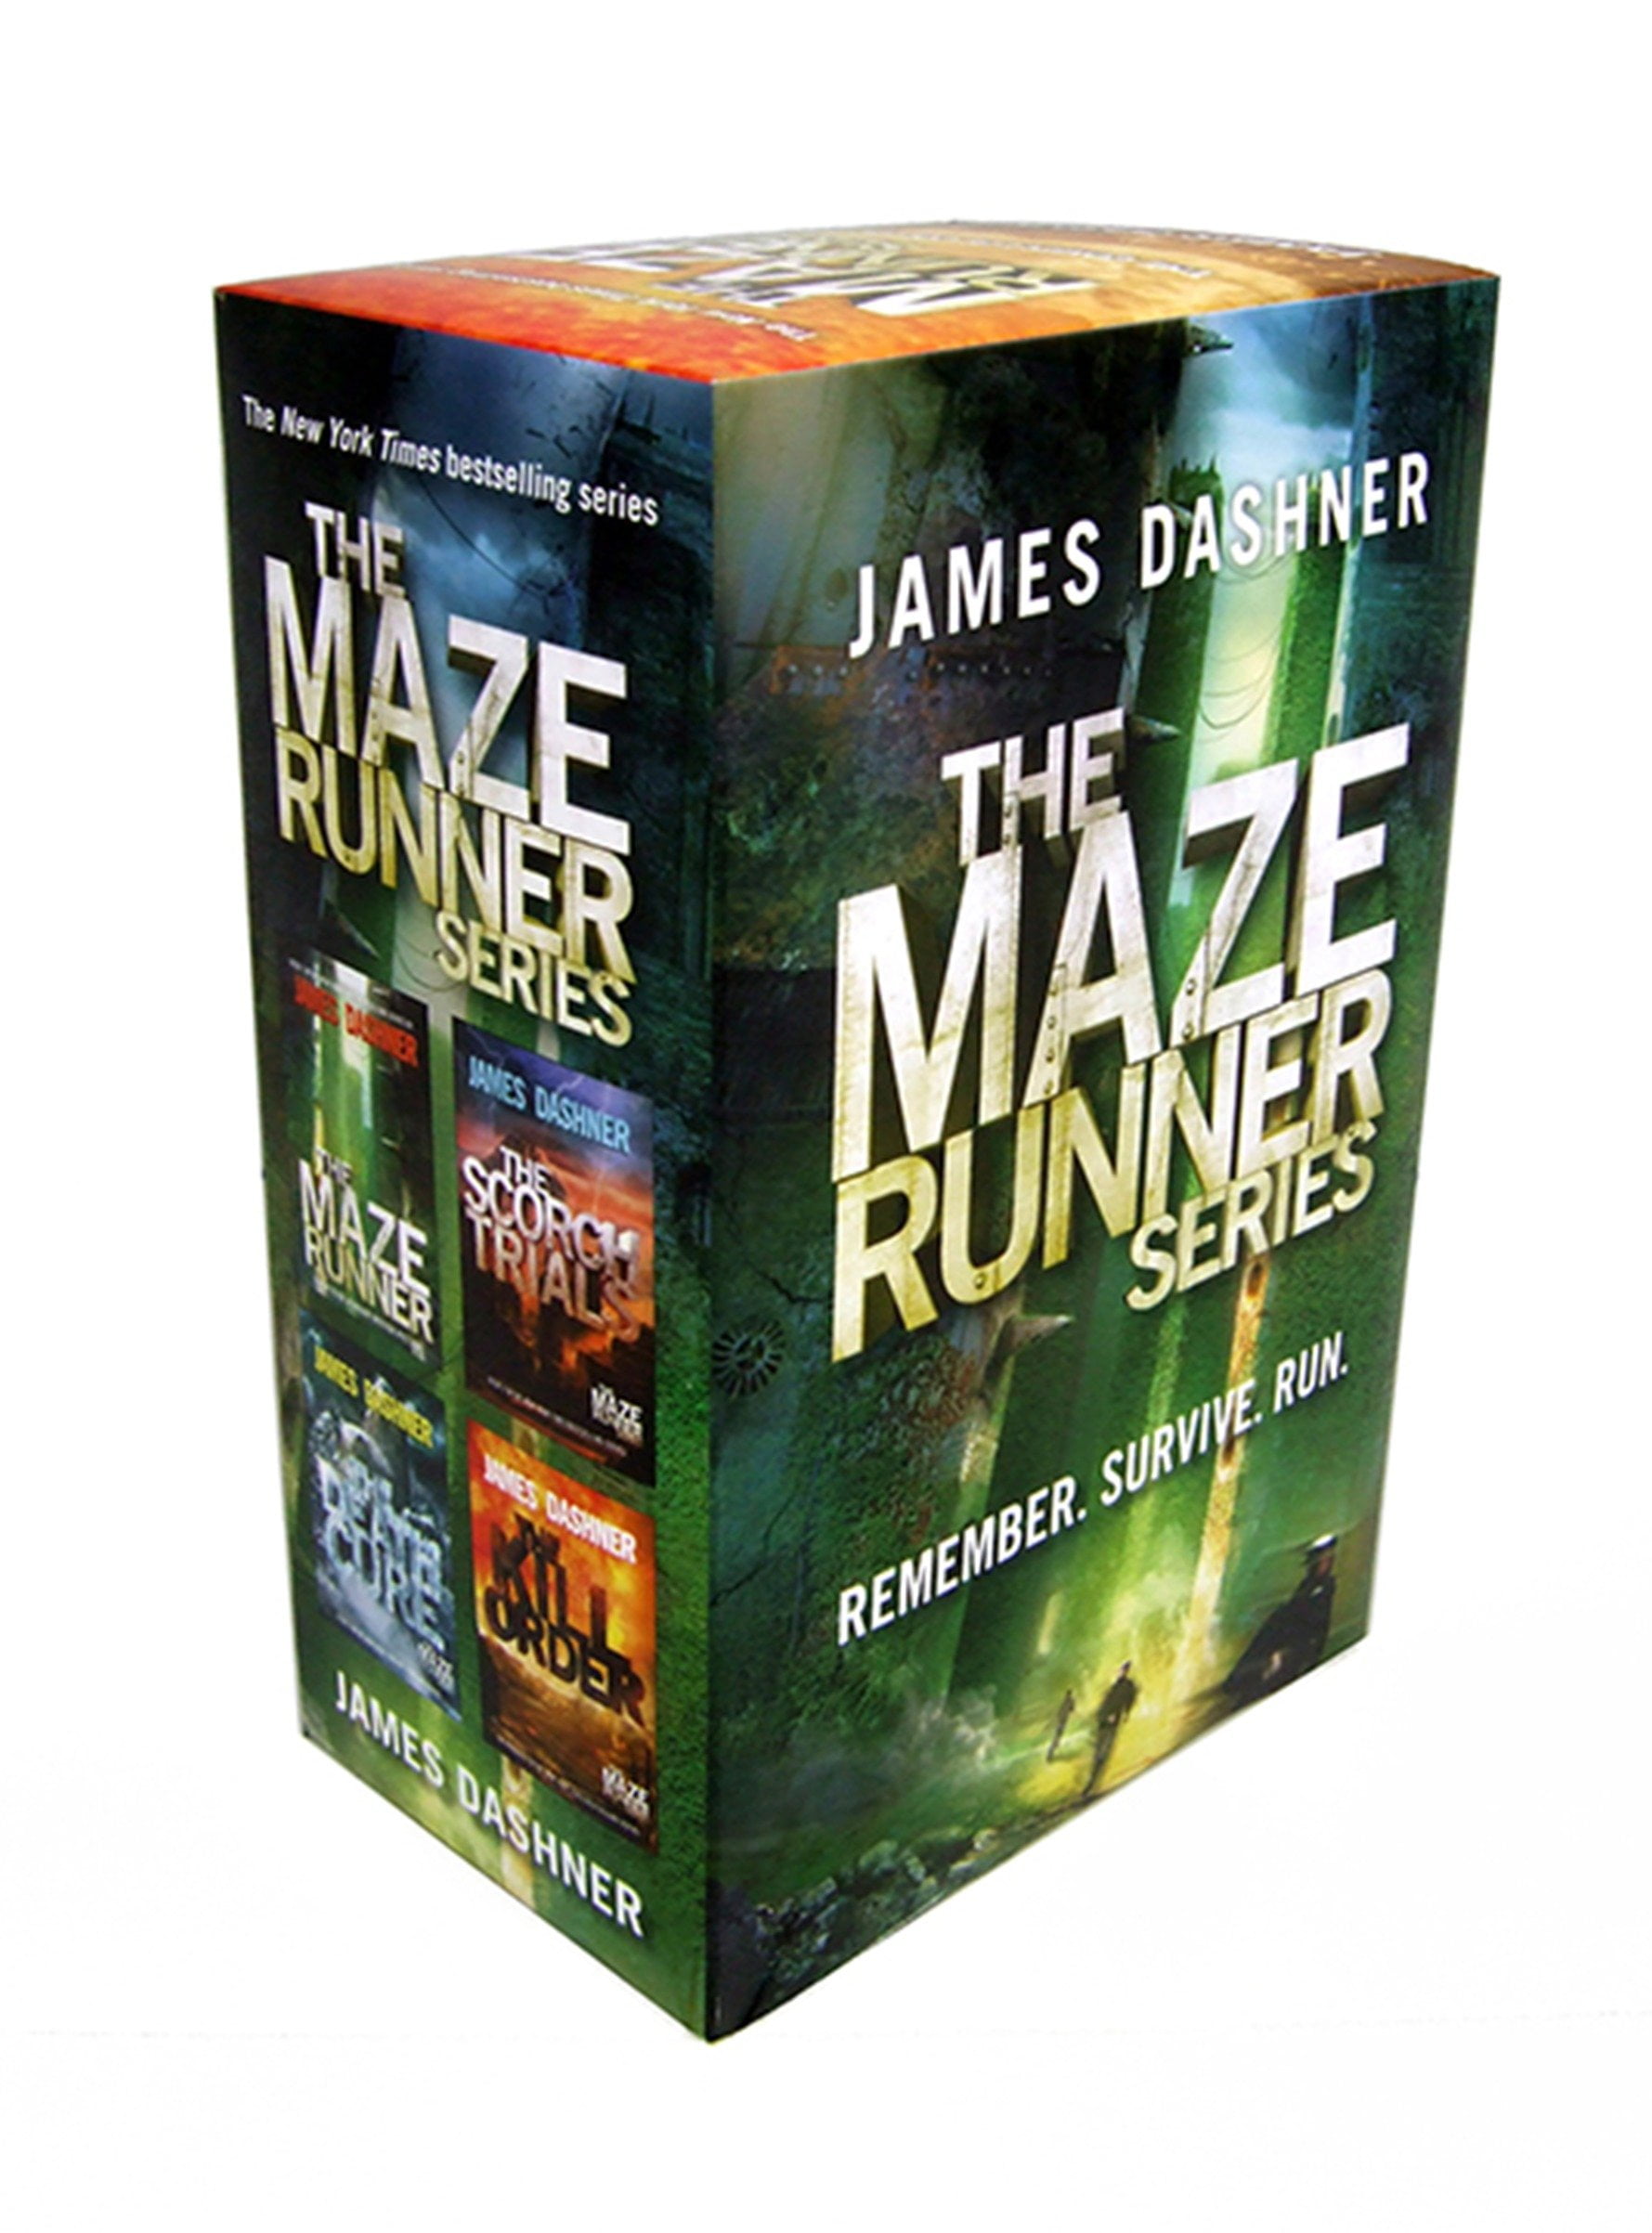 the maze runner book review essay